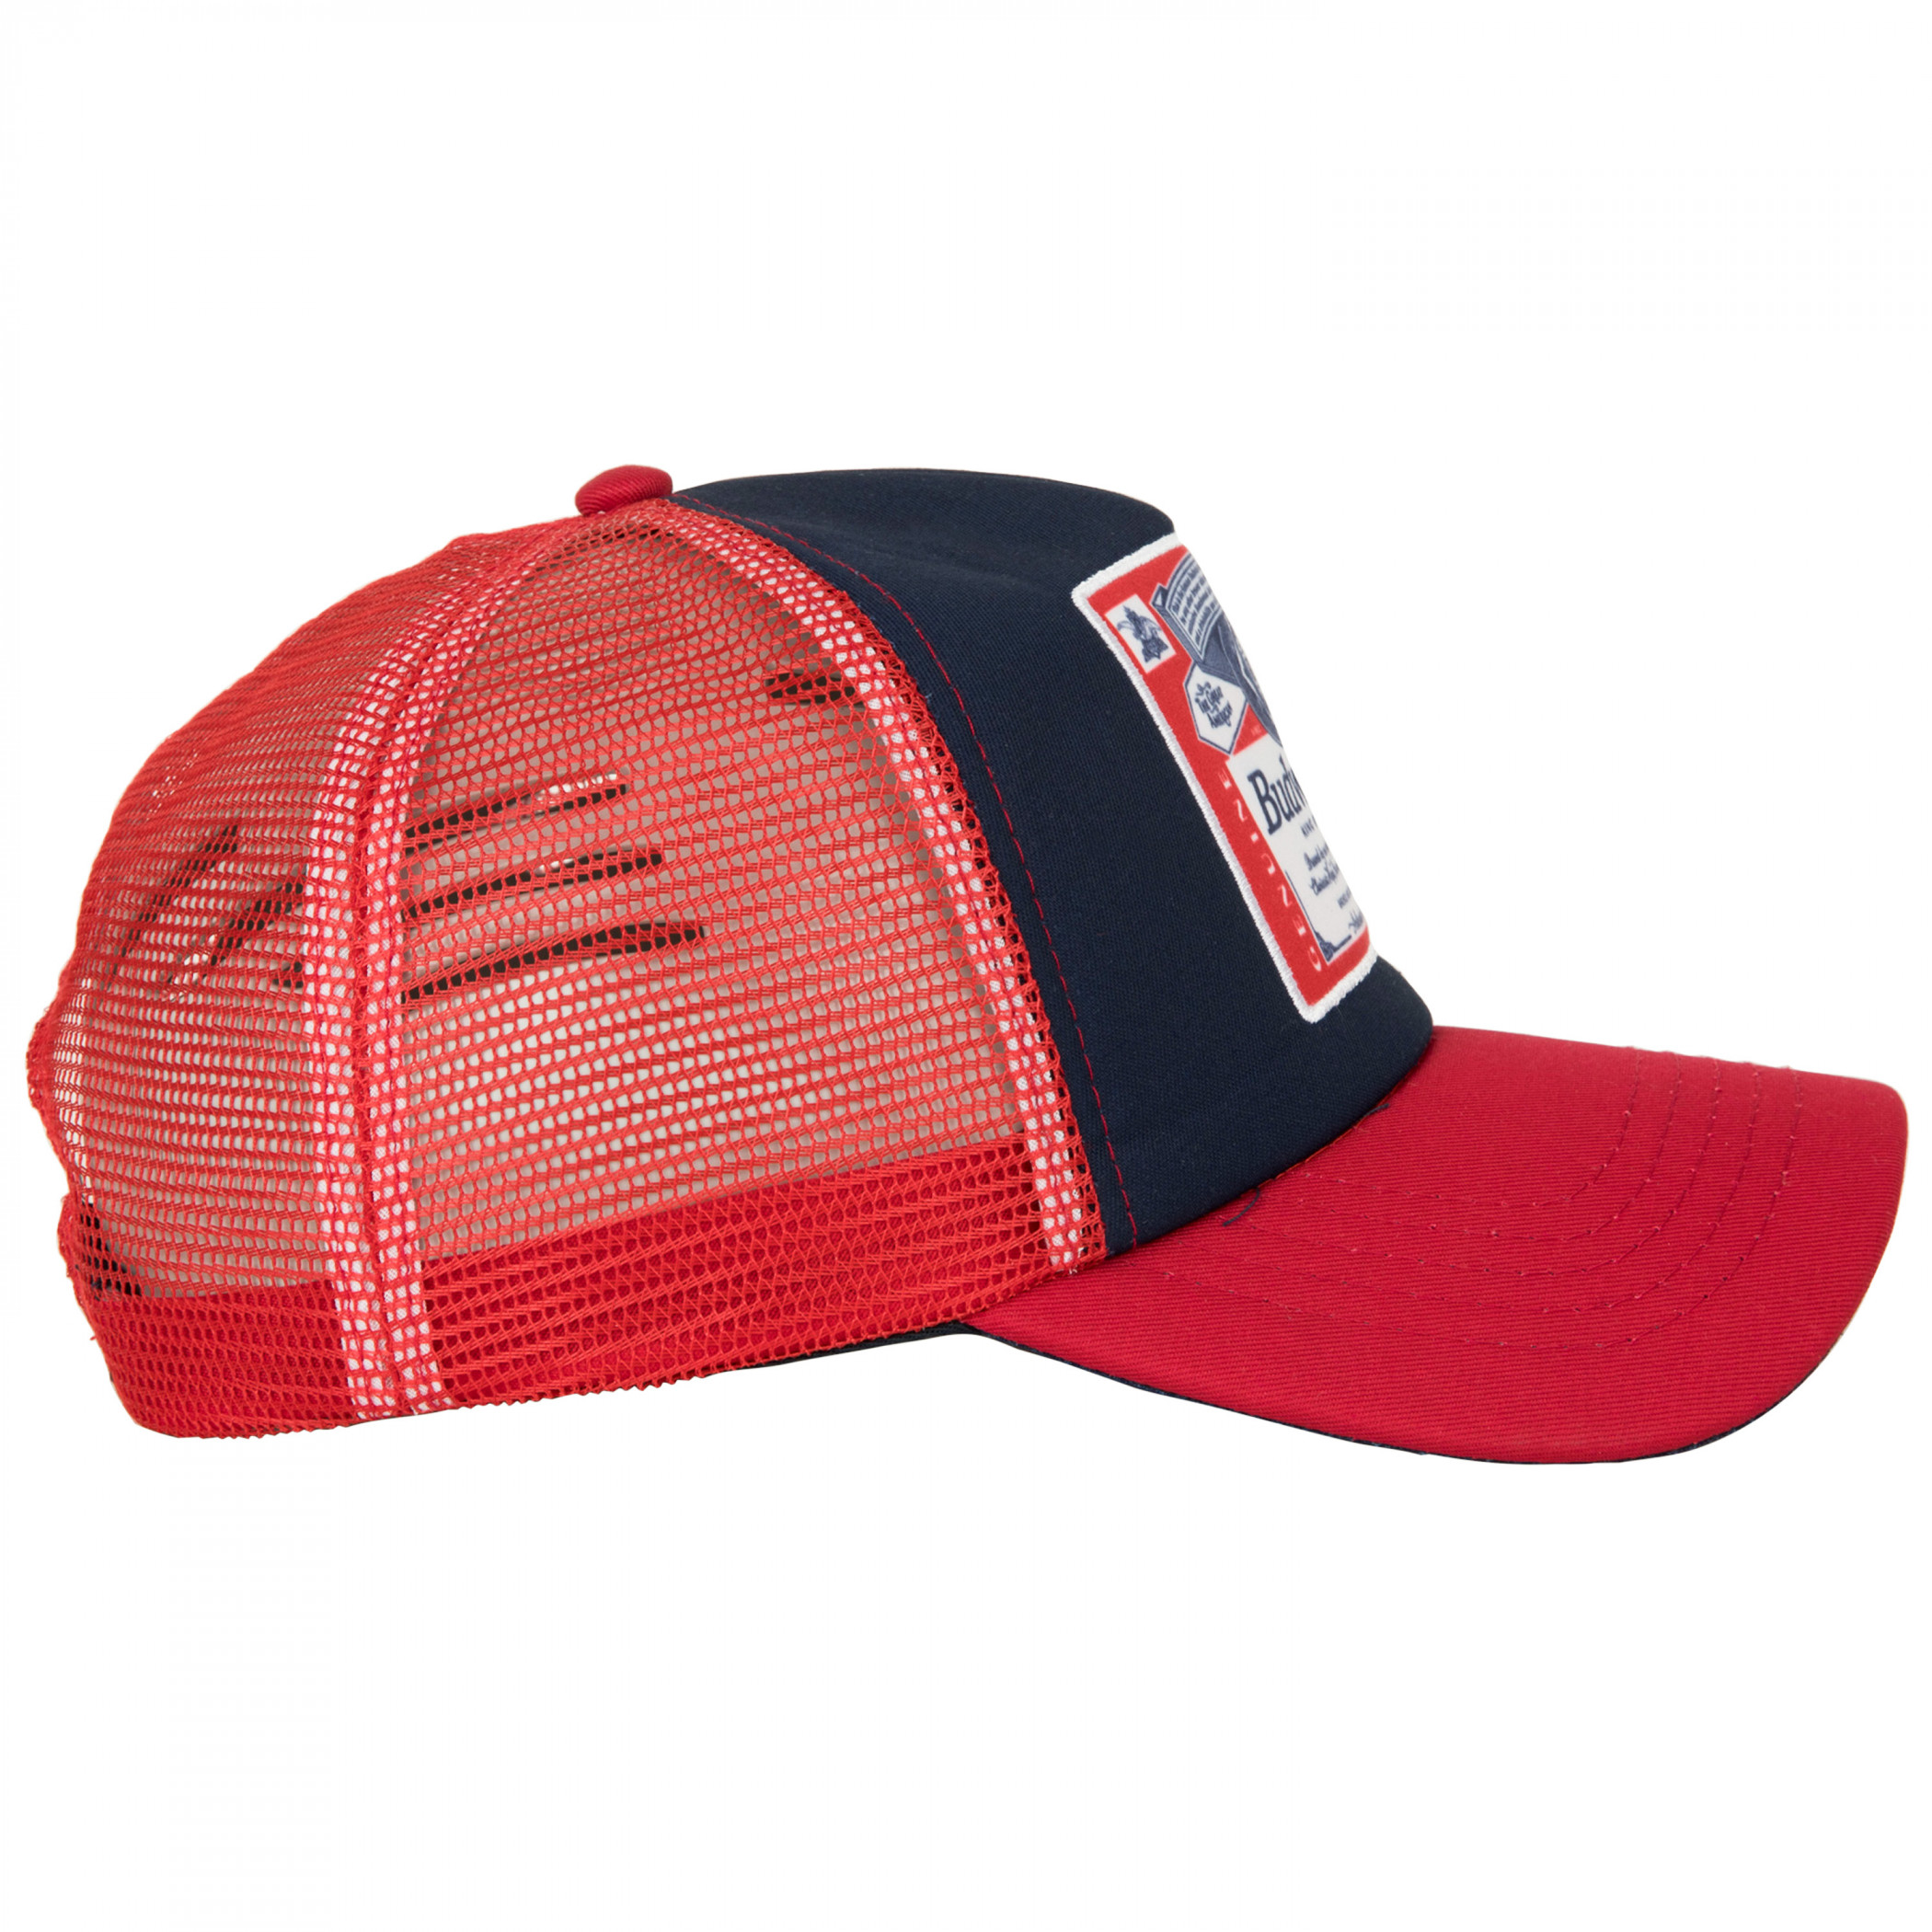 Budweiser Label Snapback Trucker Hat